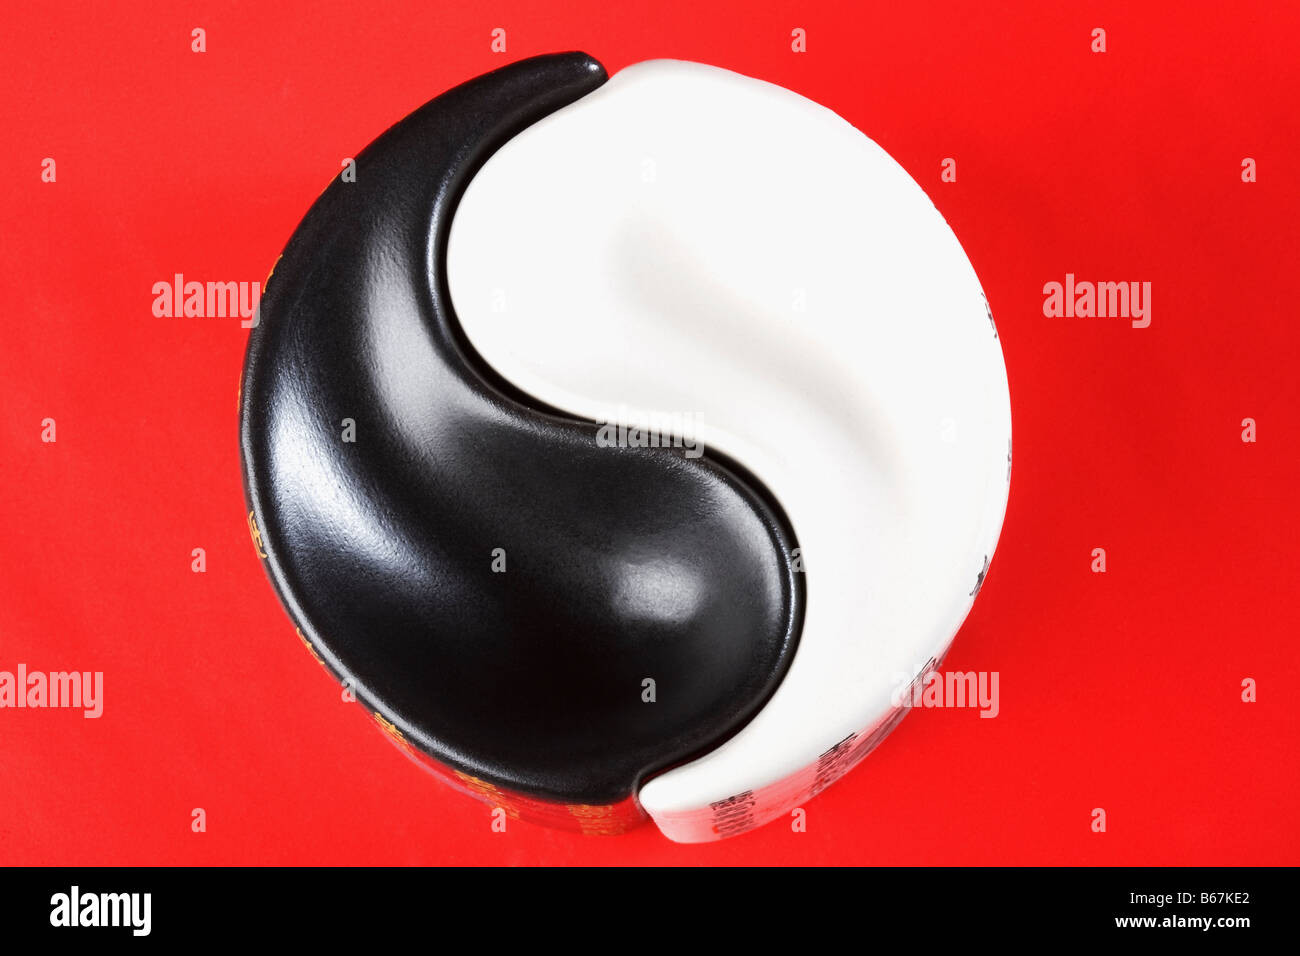 Close-up of a Ying Yang Chinese design ashtray Stock Photo